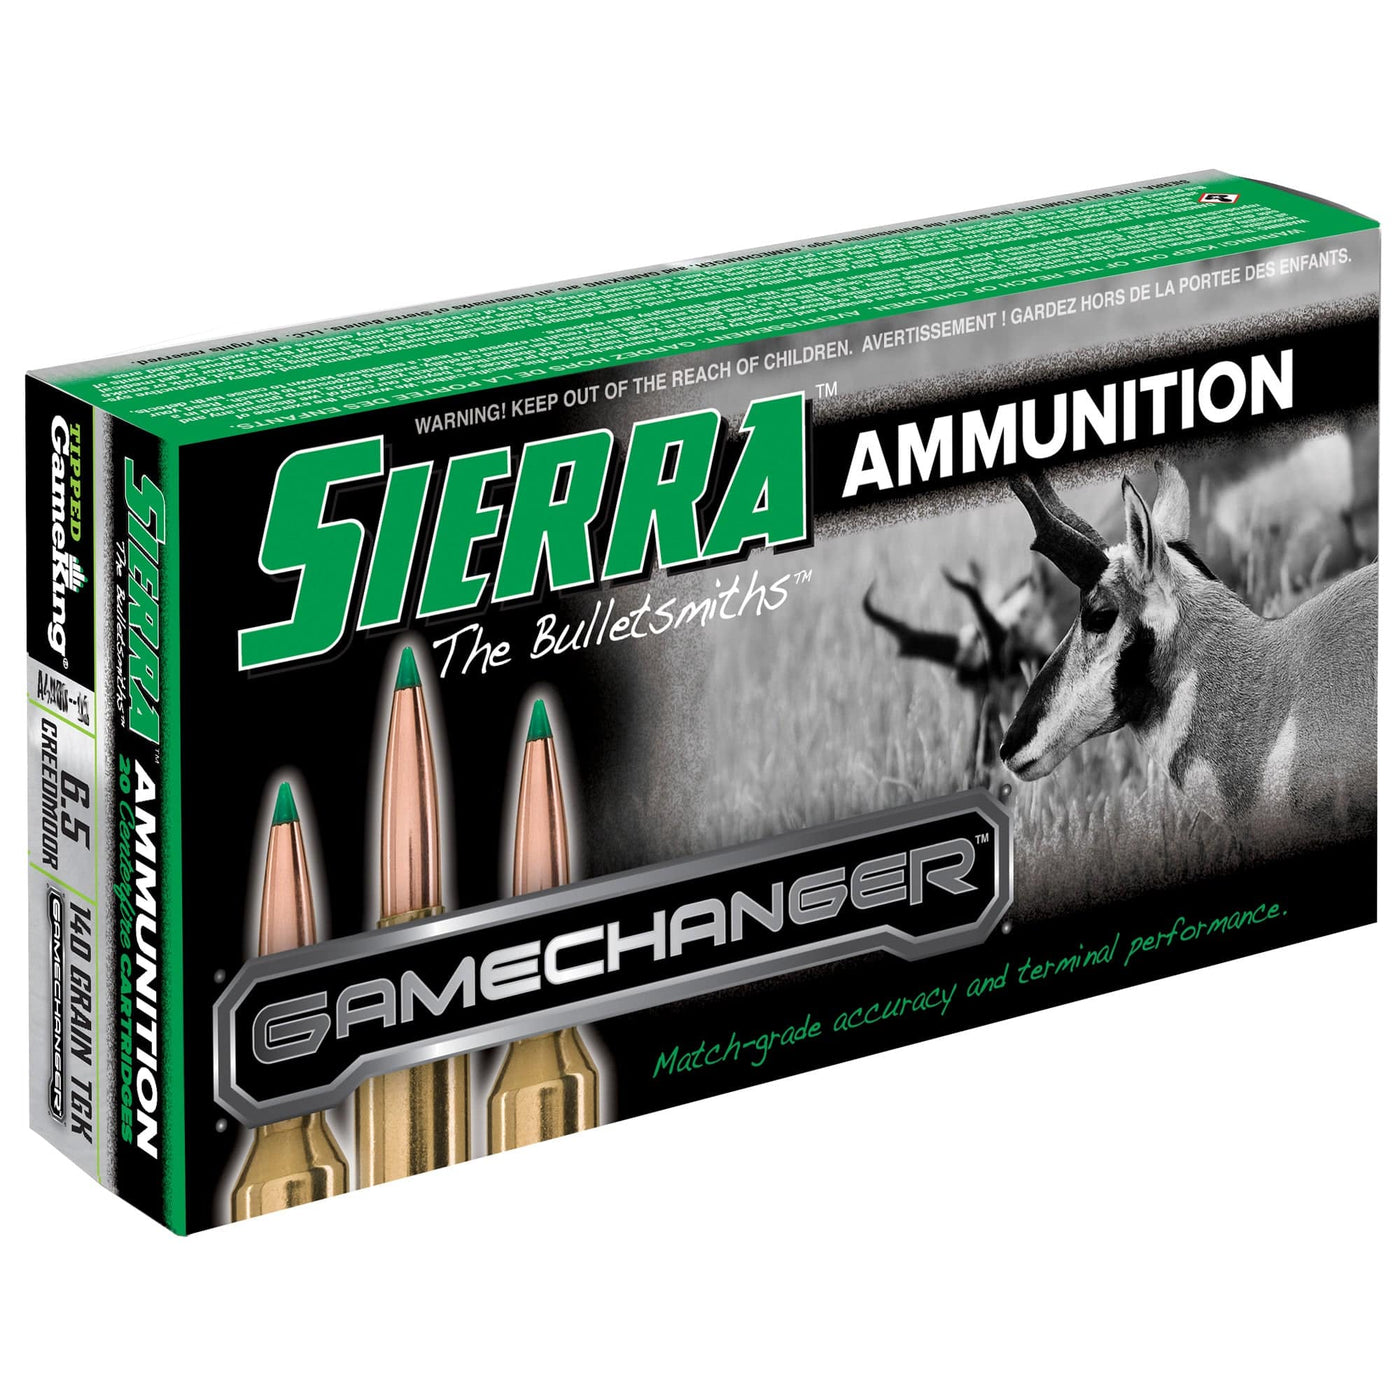 Sierra Sierra Gamechanger Rifle Ammo 243 Win. 90 Gr. Tgk 140 grain / 6.5 creedmoor Ammo